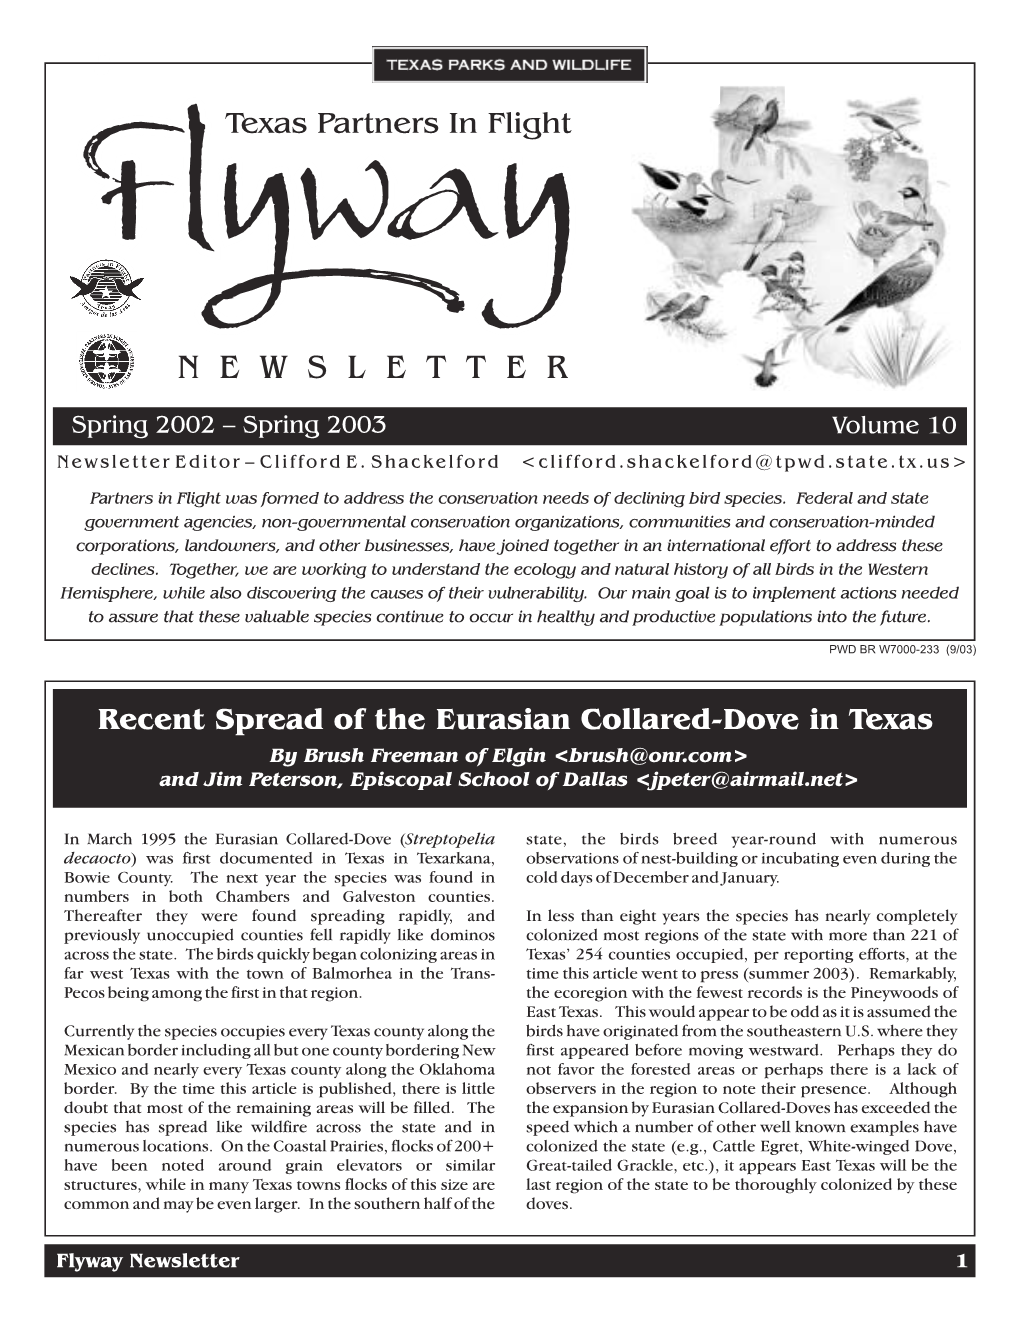 Partners in Flight Flyway Newsletter, Volume 10